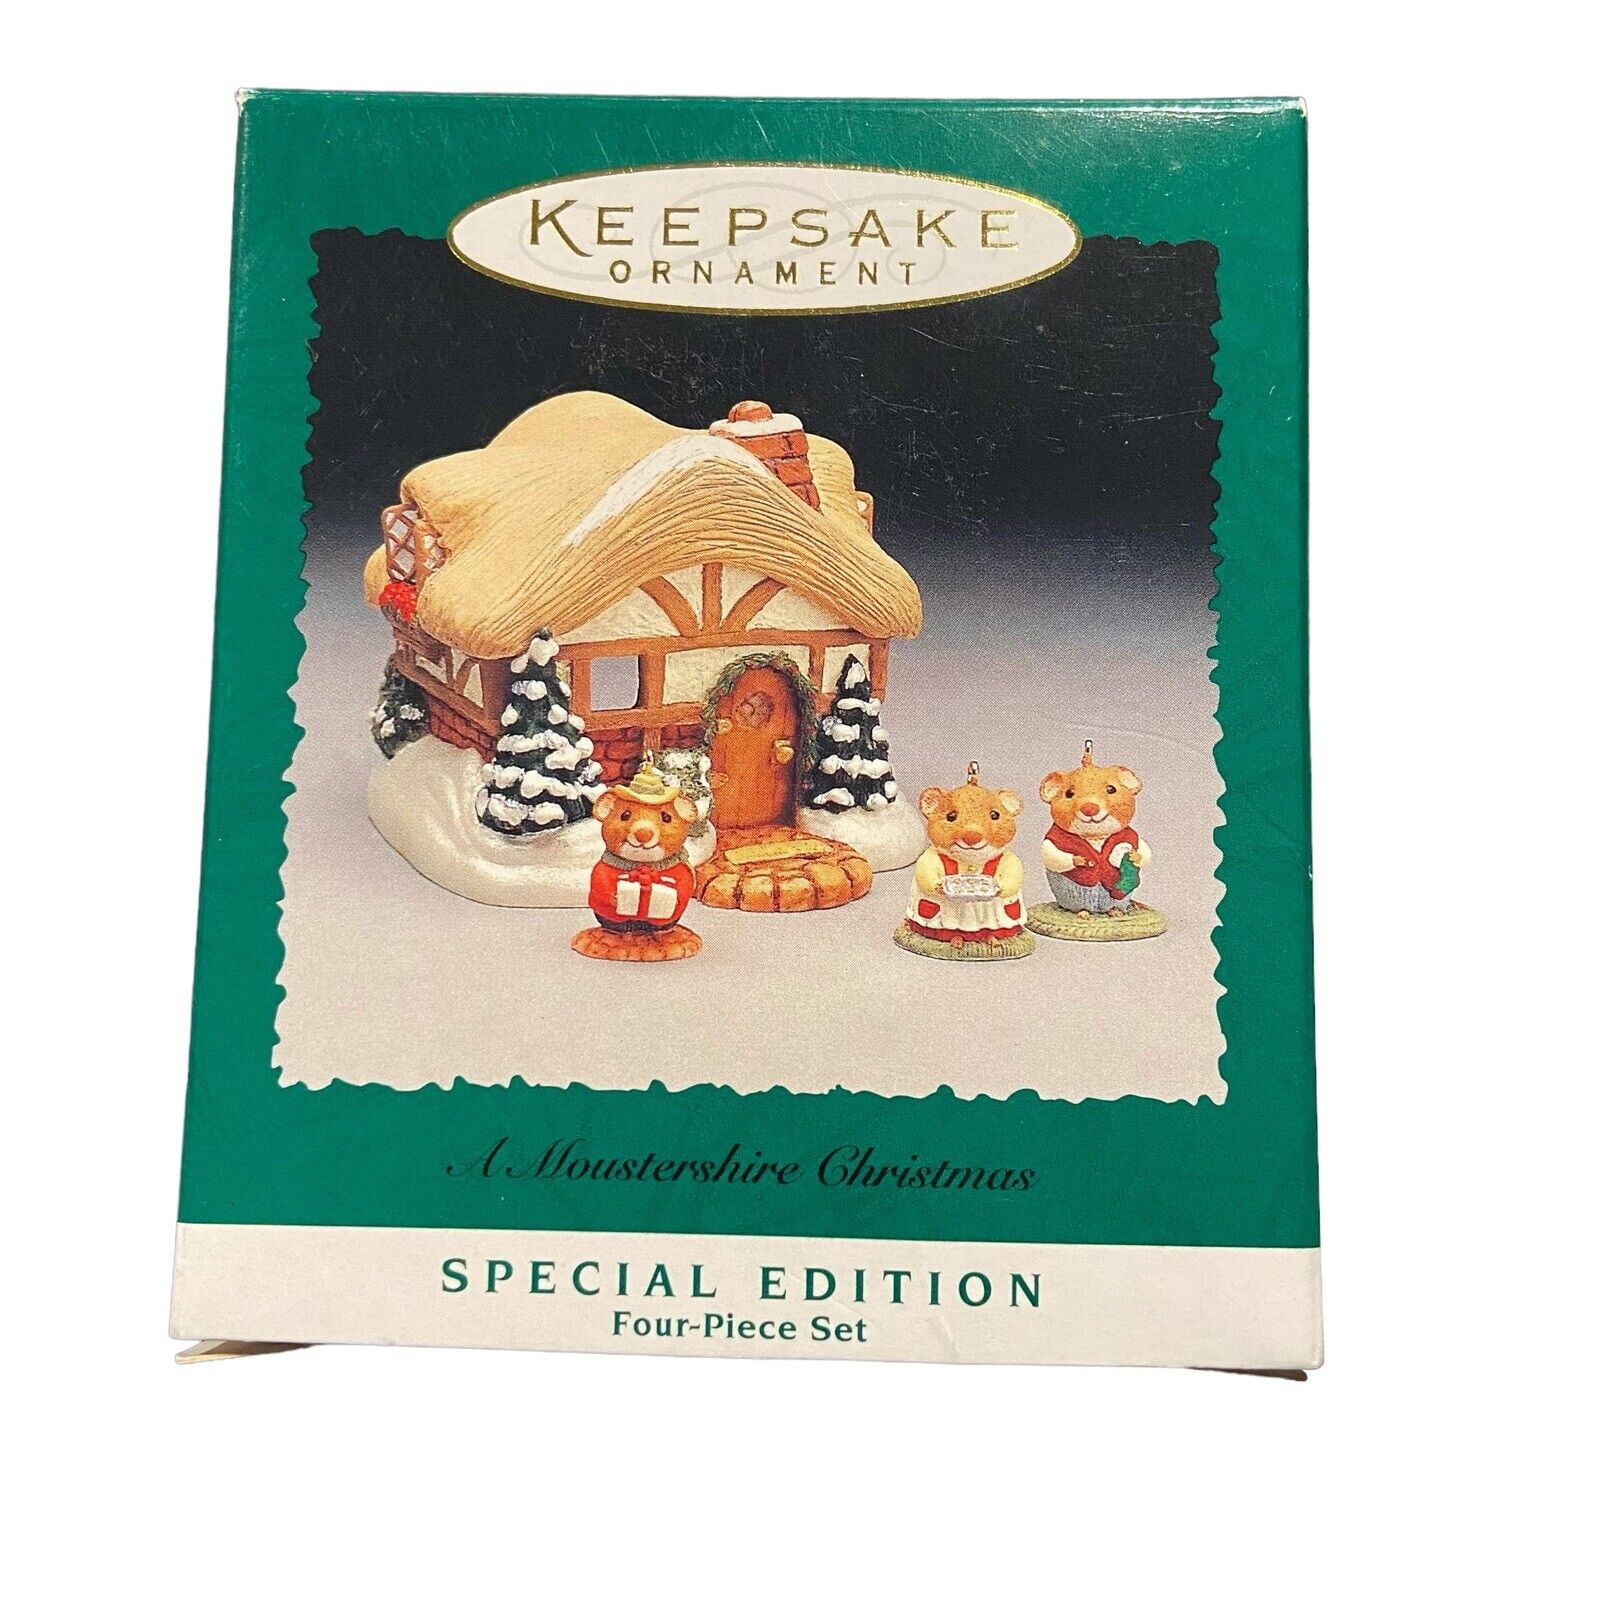 1995 Hallmark Keepsake Ornament A Moustershire Christmas 4 Piece Set